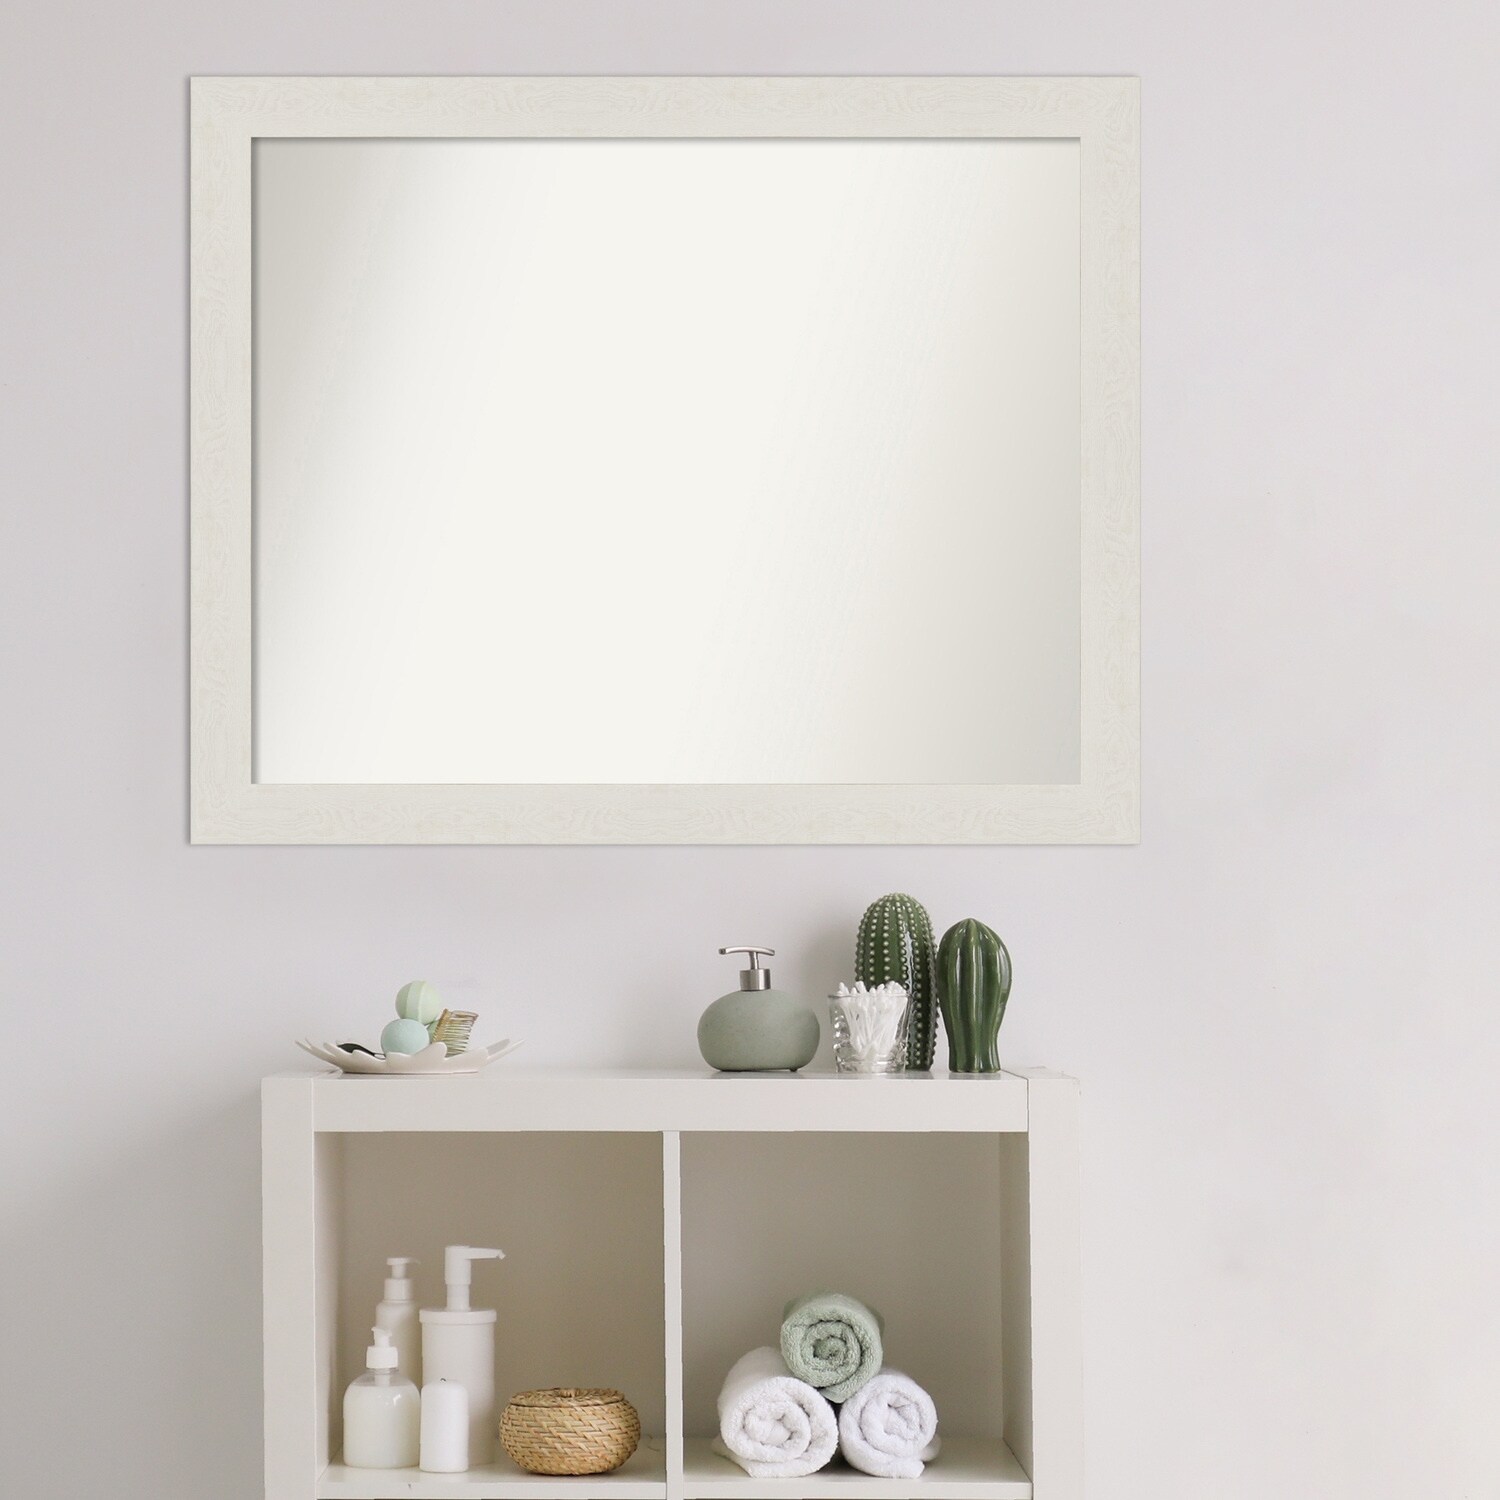 Non-Beveled Bathroom Wall Mirror - Rustic Plank White Narrow Frame